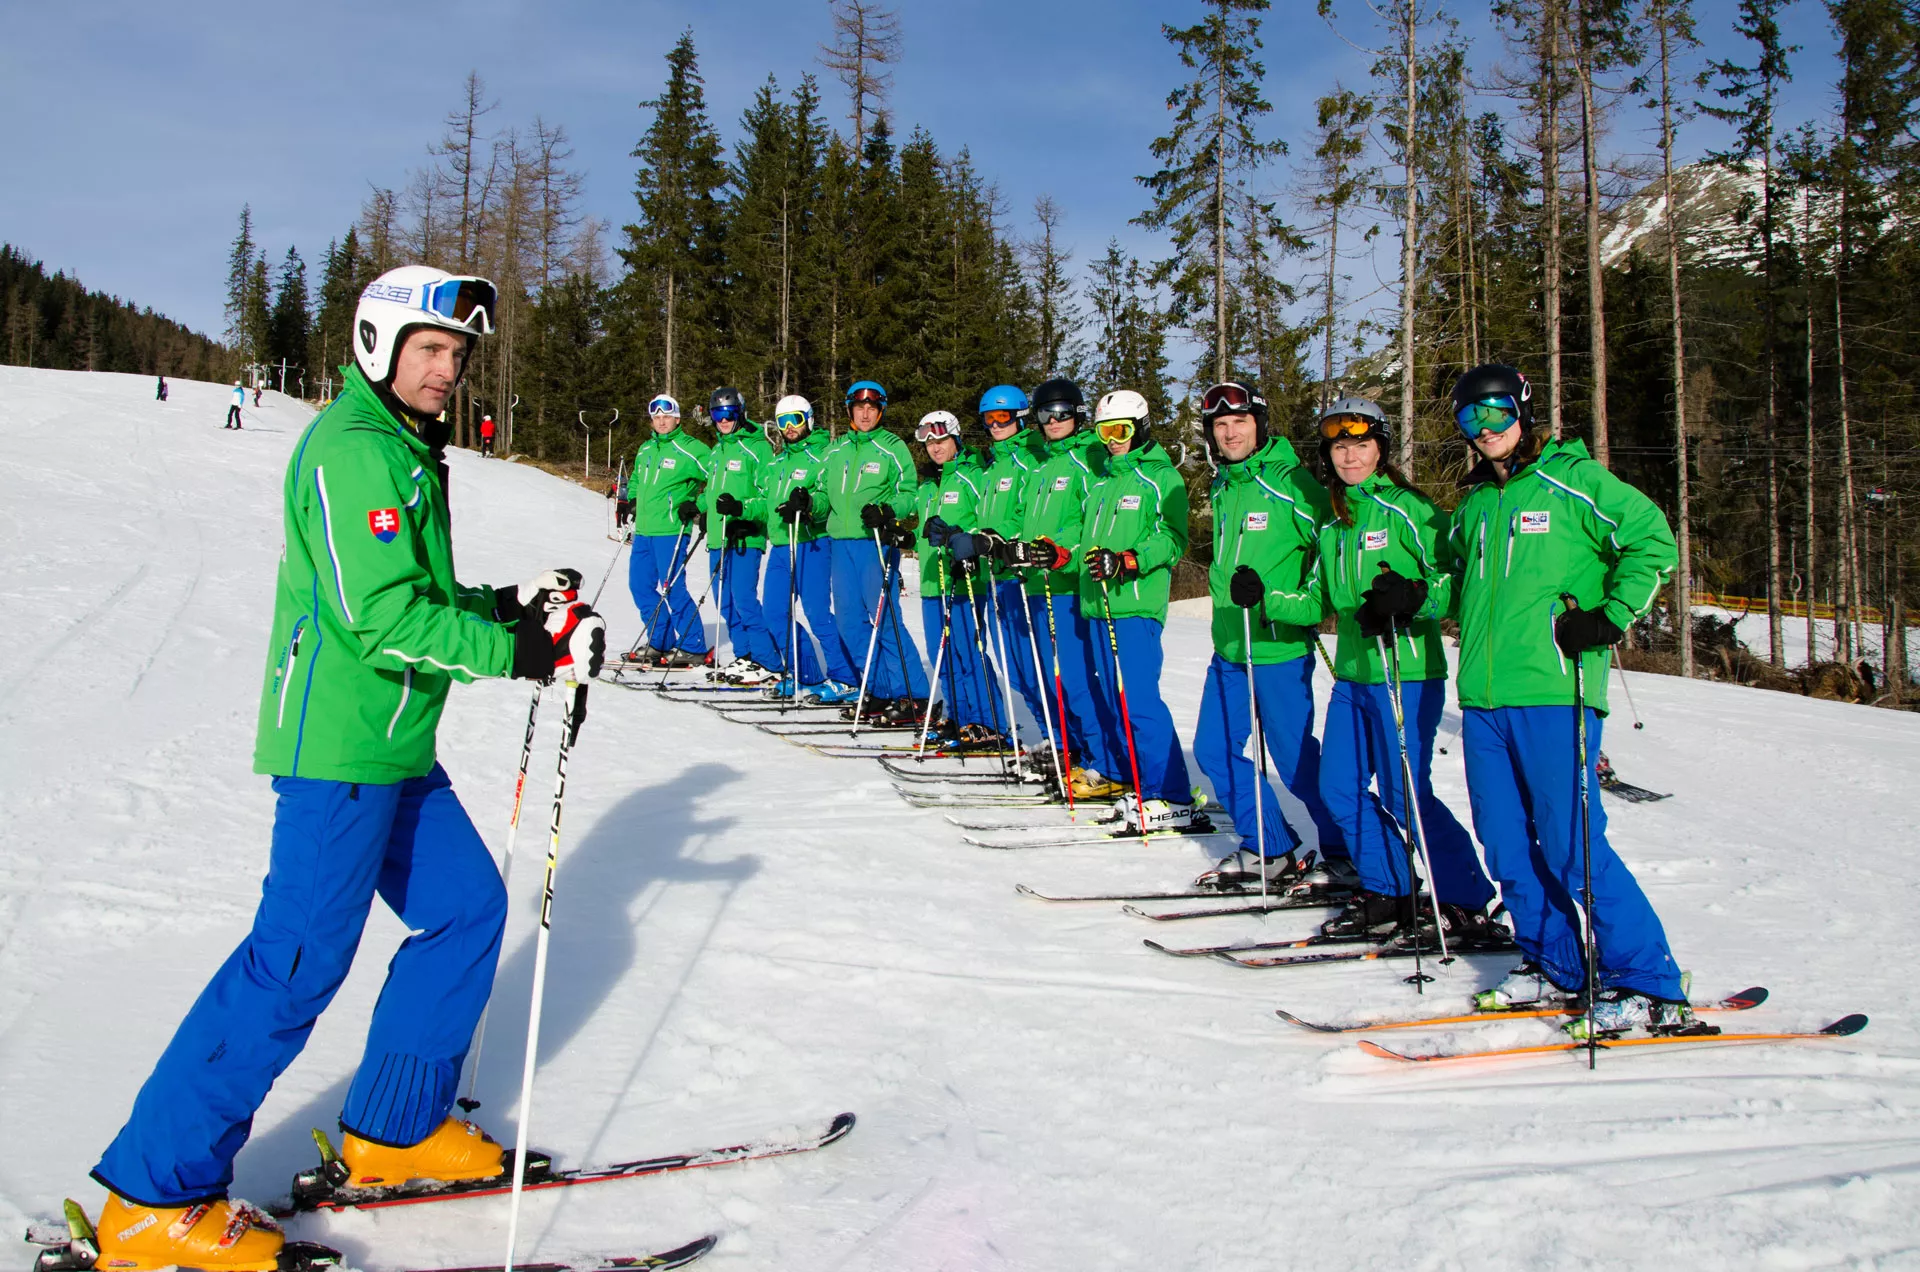 TATRA Ski Rent & School in Slovakia, Europe | Snowboarding,Skiing - Rated 1